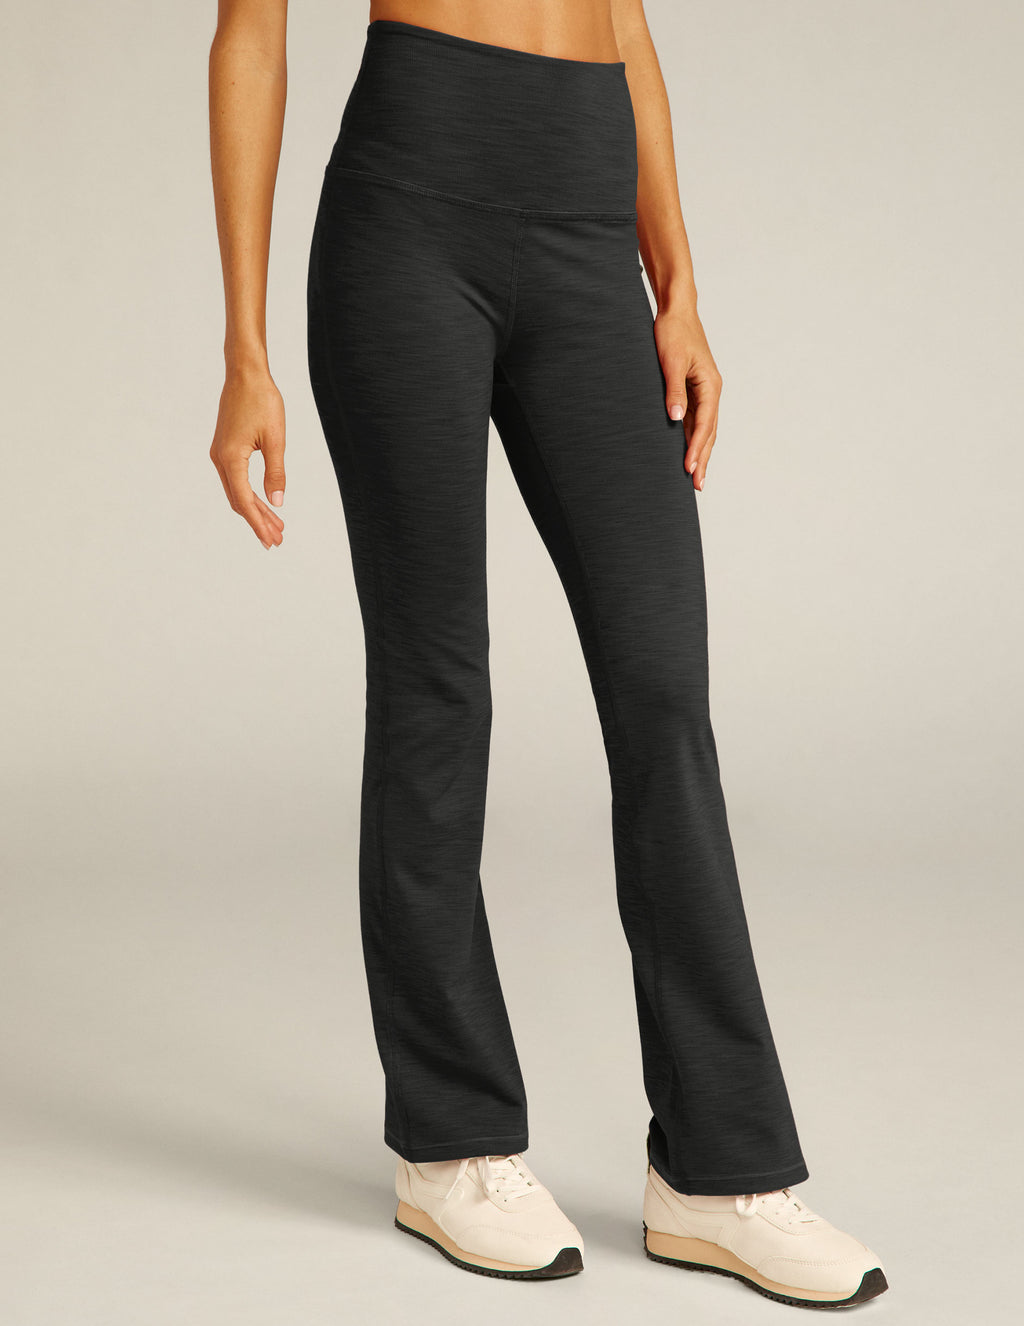 Yoga Pants Marikahigh Waist Modal Yoga Pants For Women - Stretchy